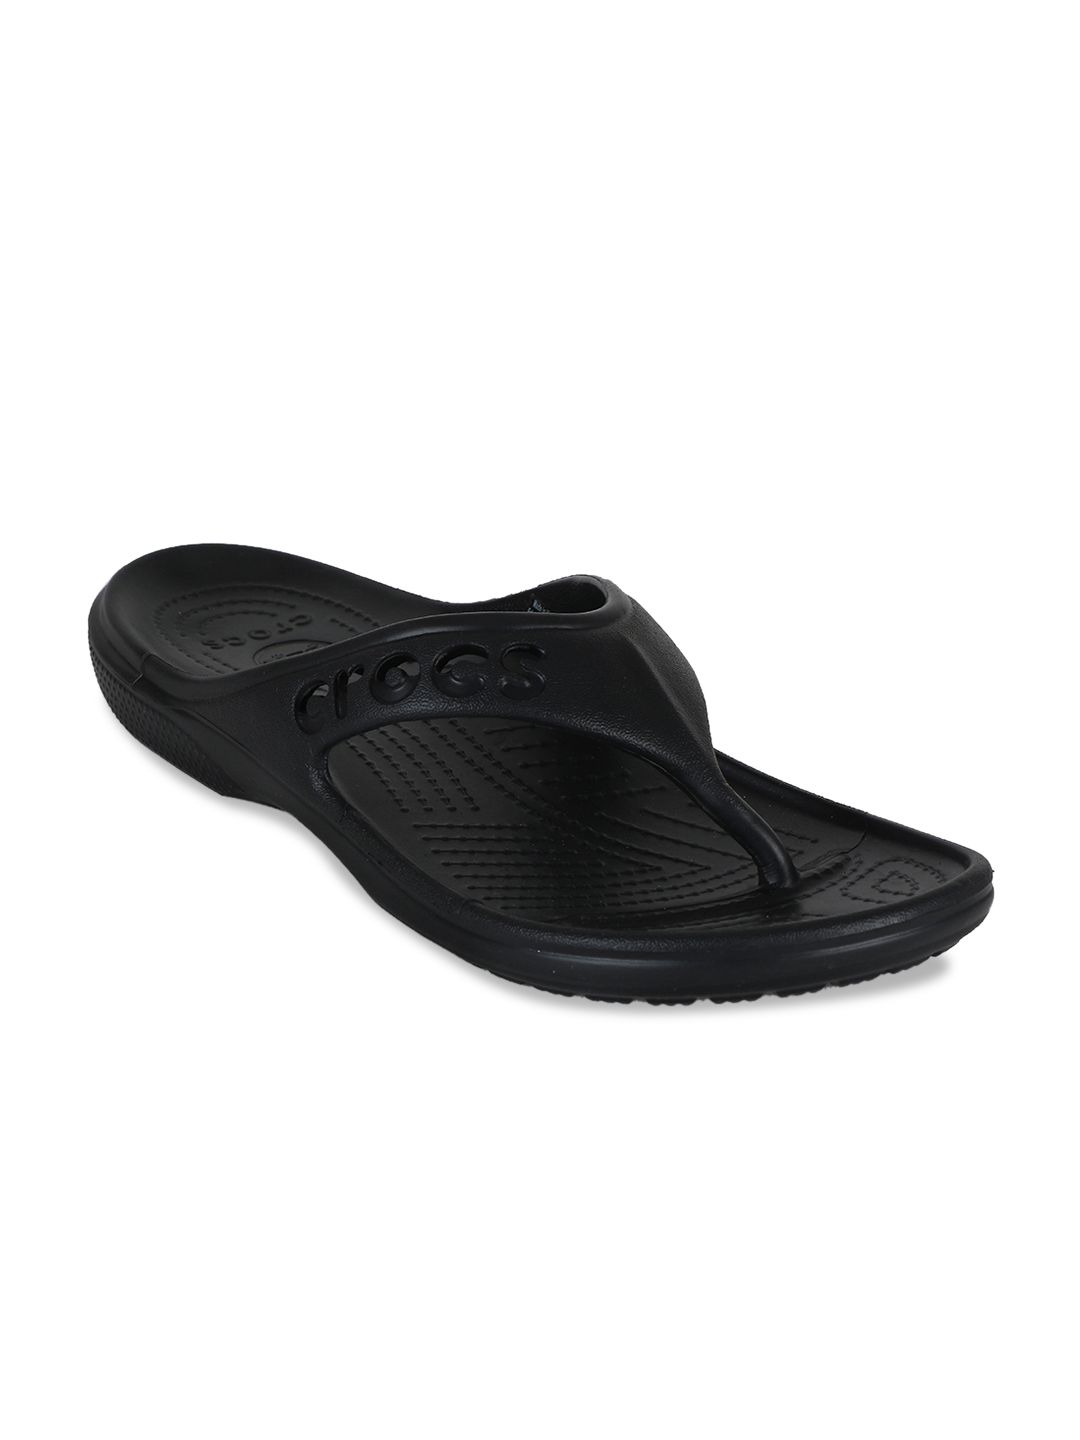 Crocs Women Black Solid Thong Flip-Flops Price in India